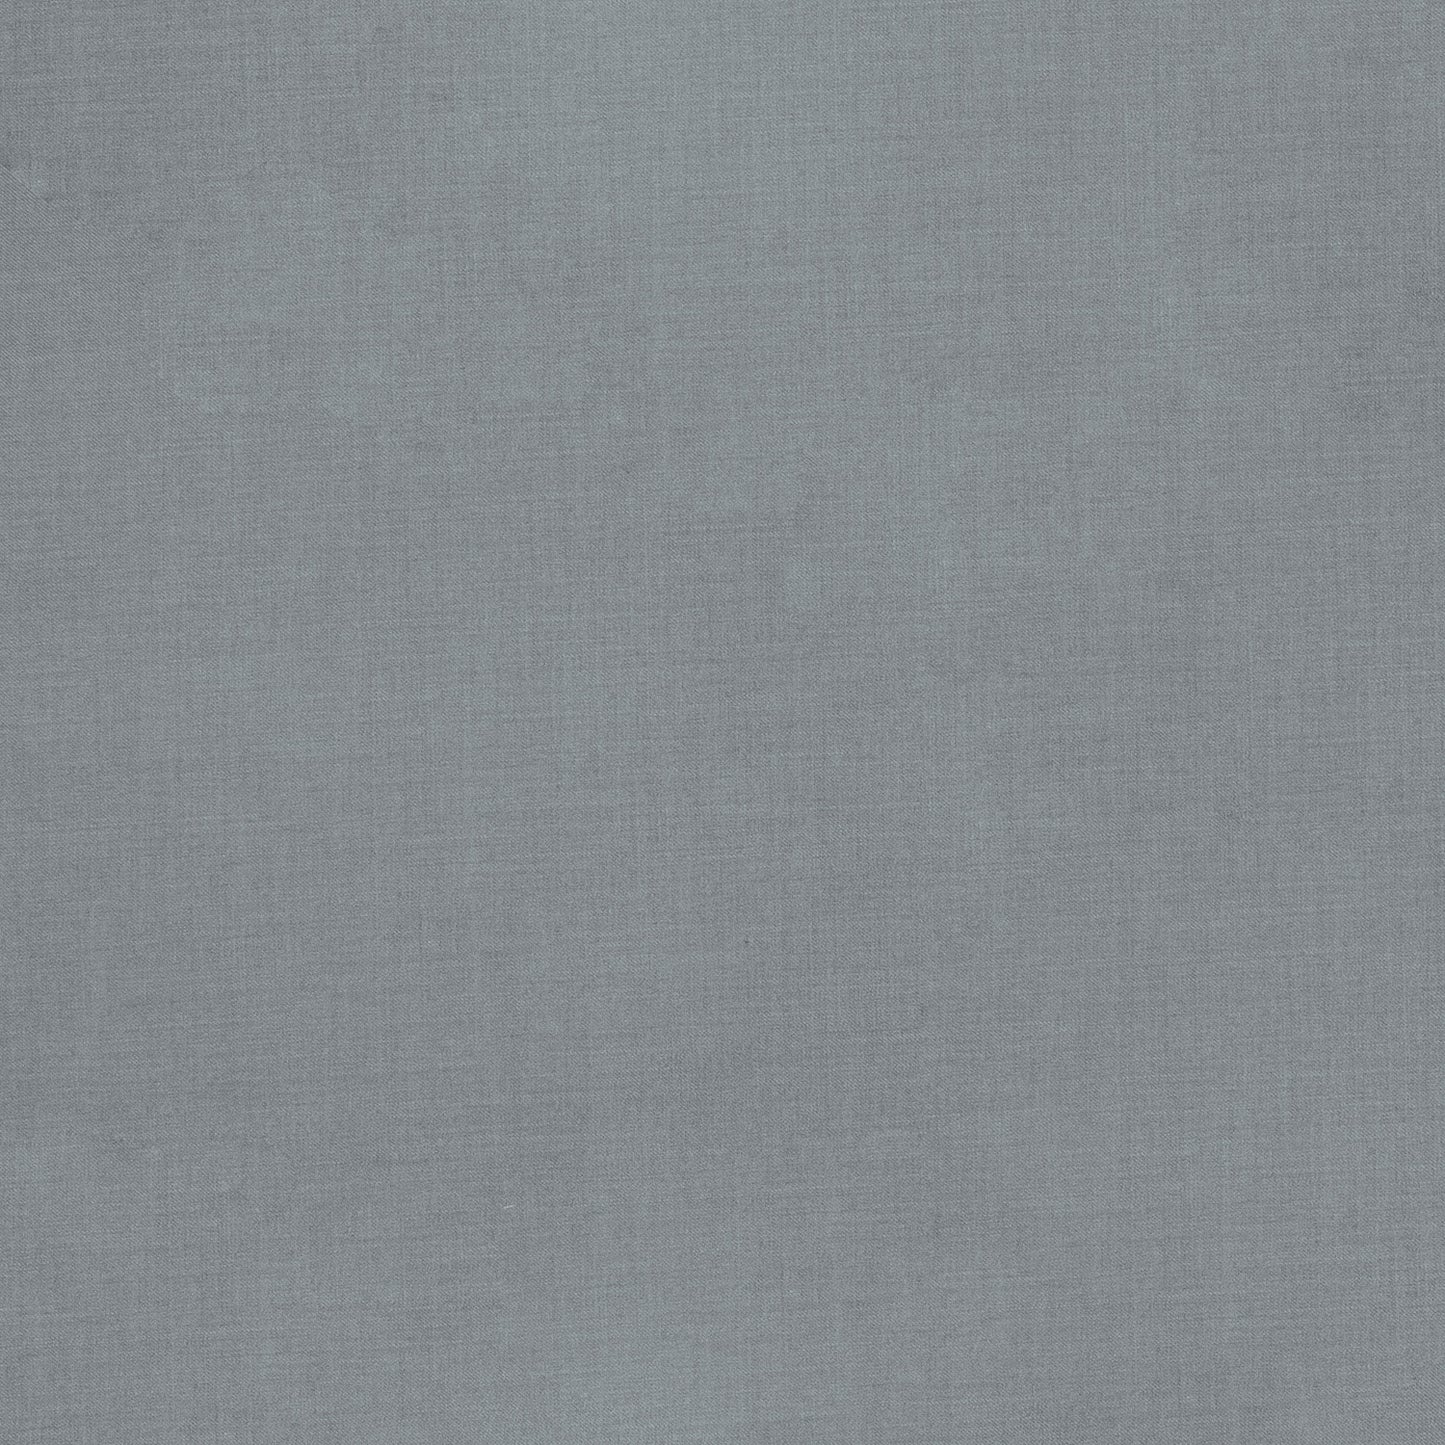 Suiting Woven-Self Edge 150cm Light Grey